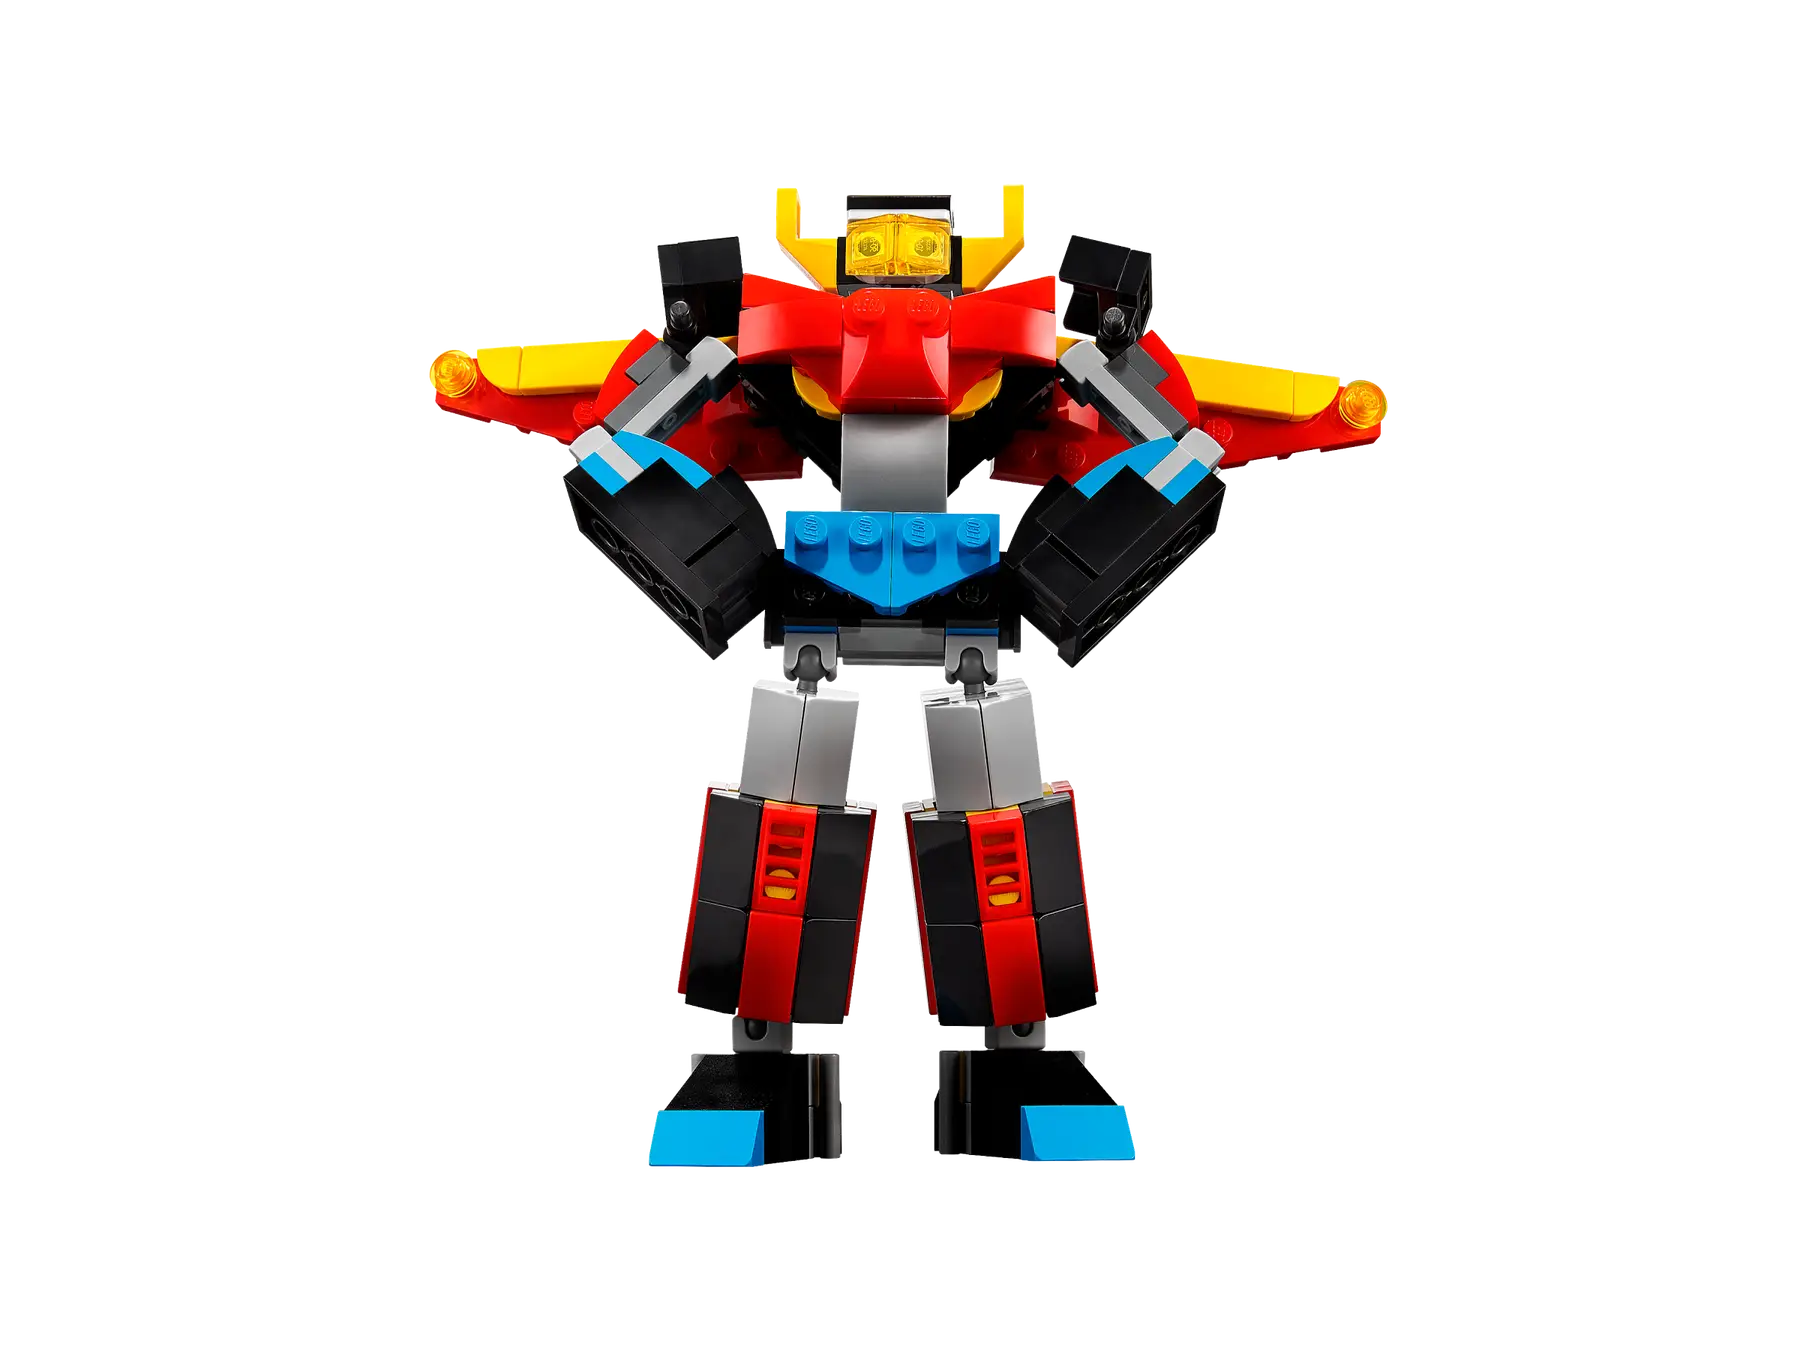 Lego Creator - Super Robot